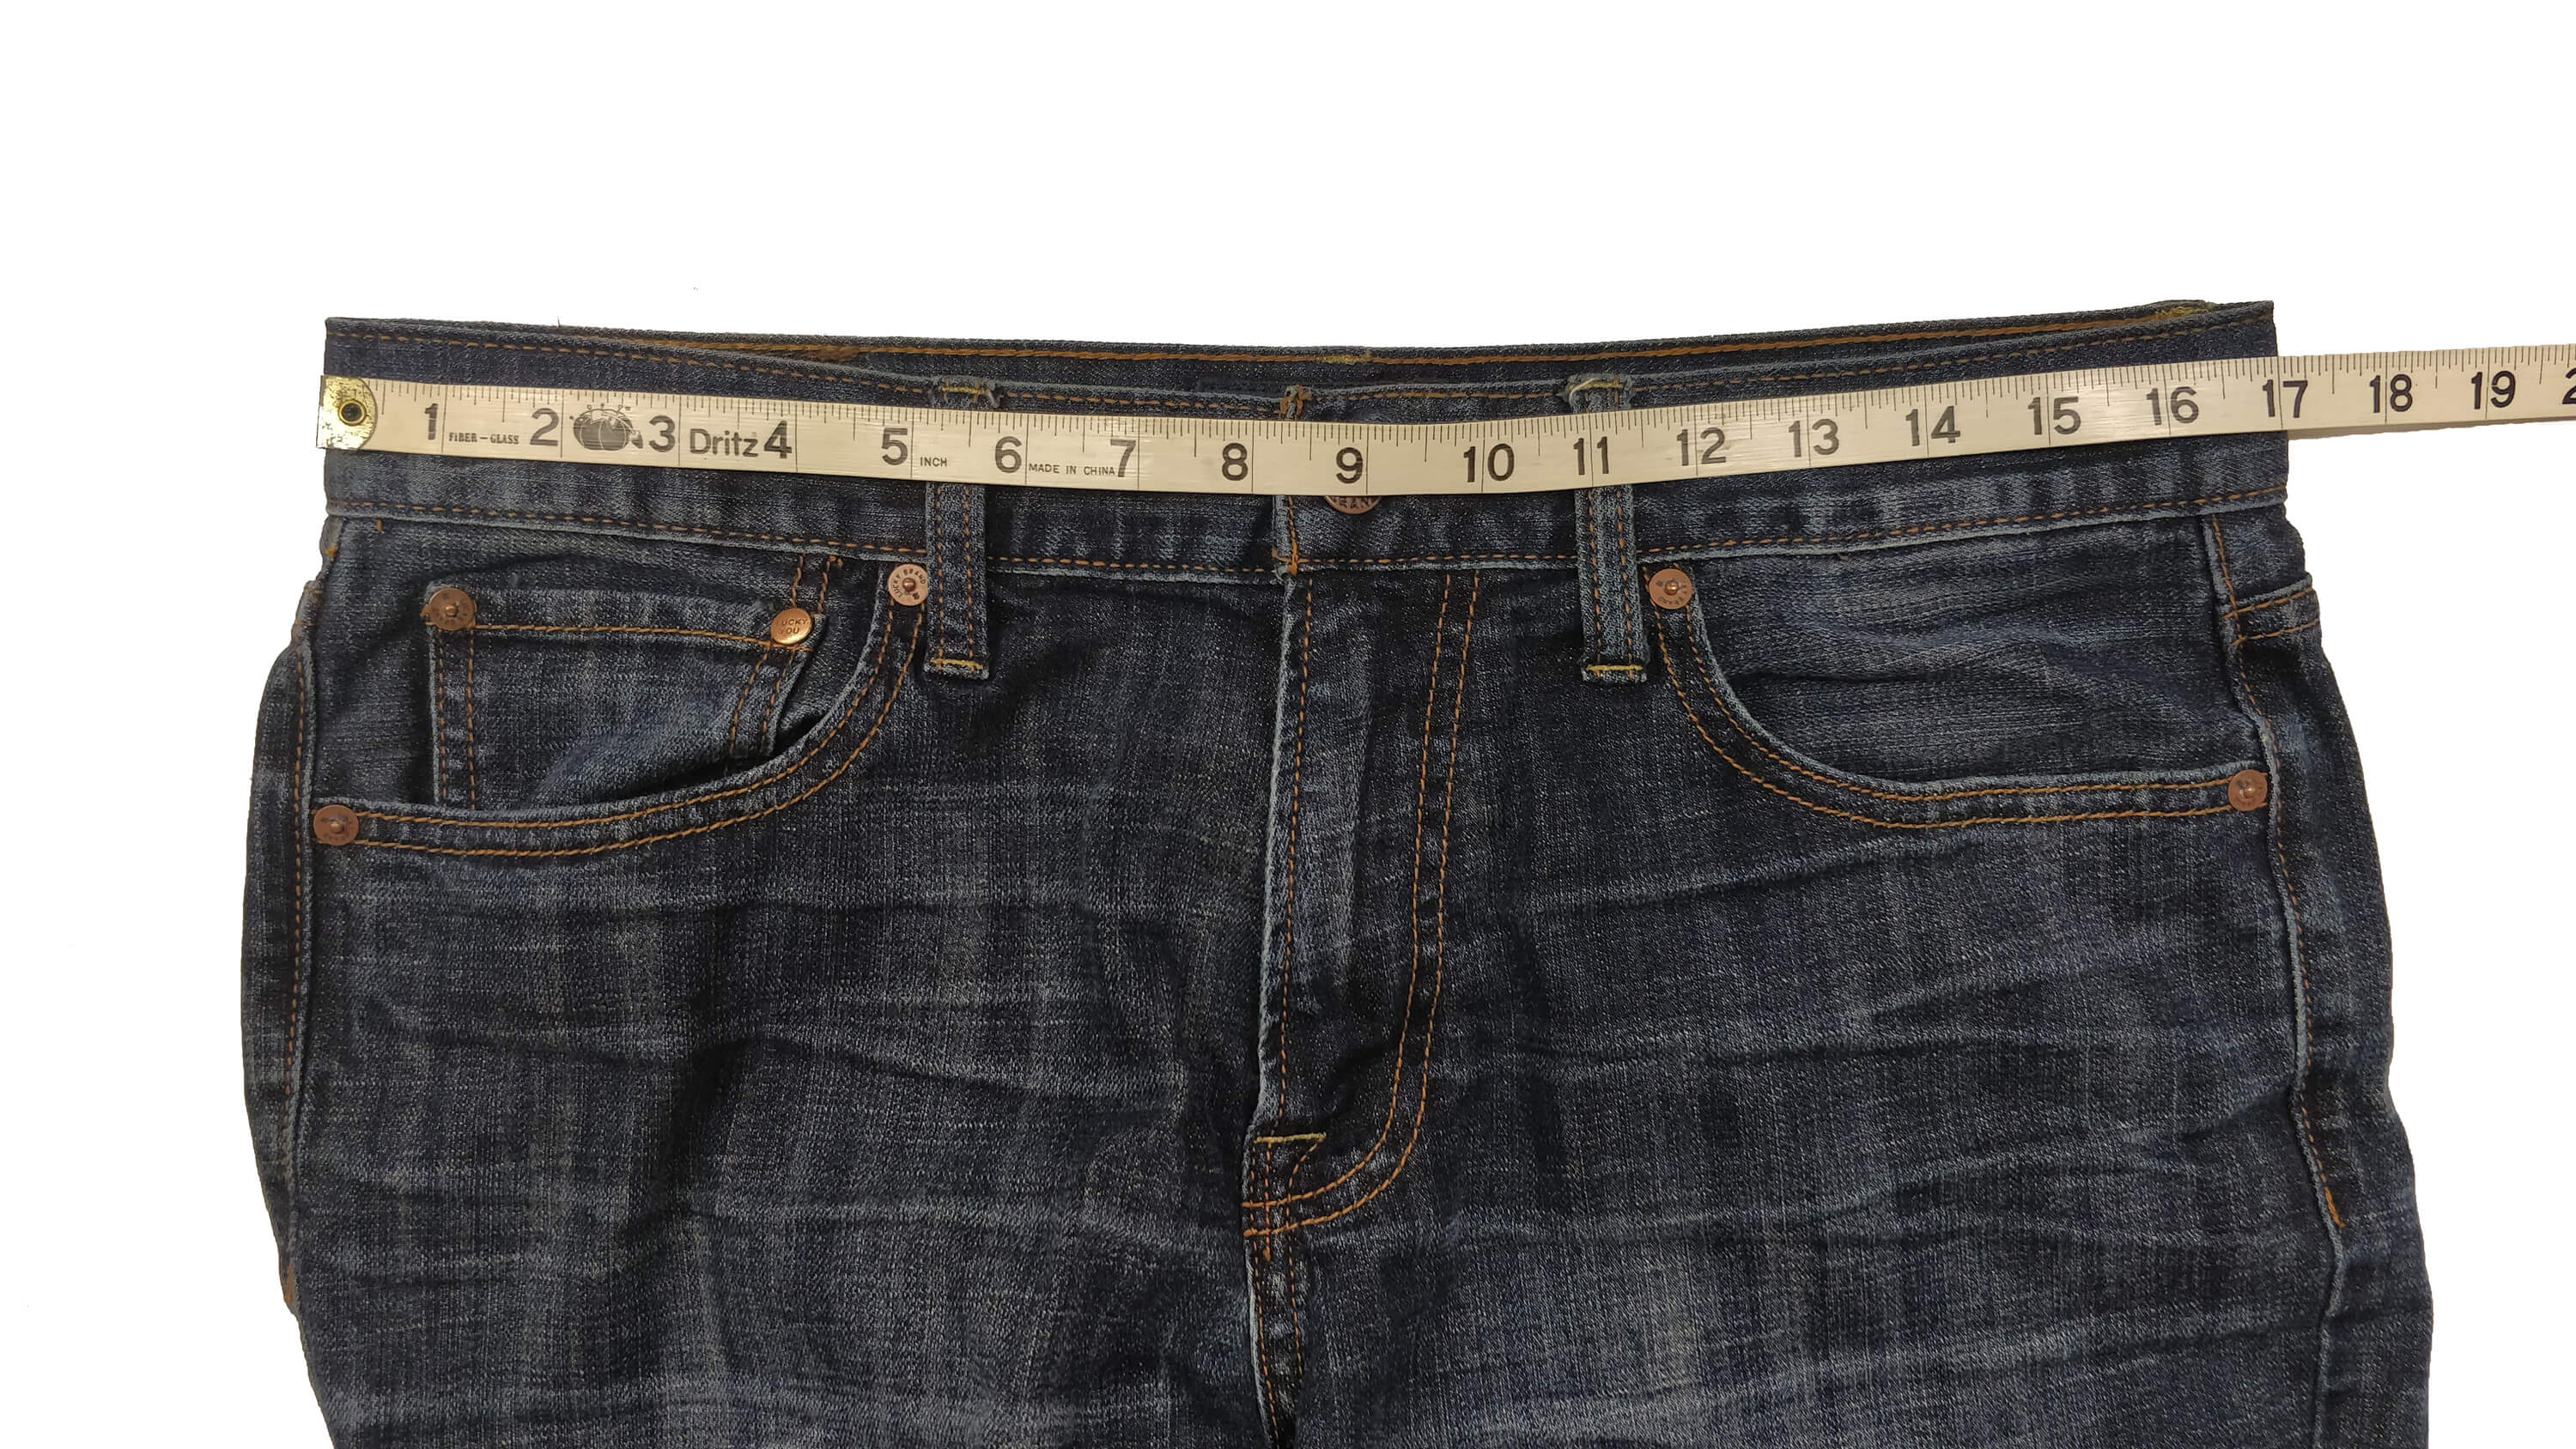 how to measure jeans waist